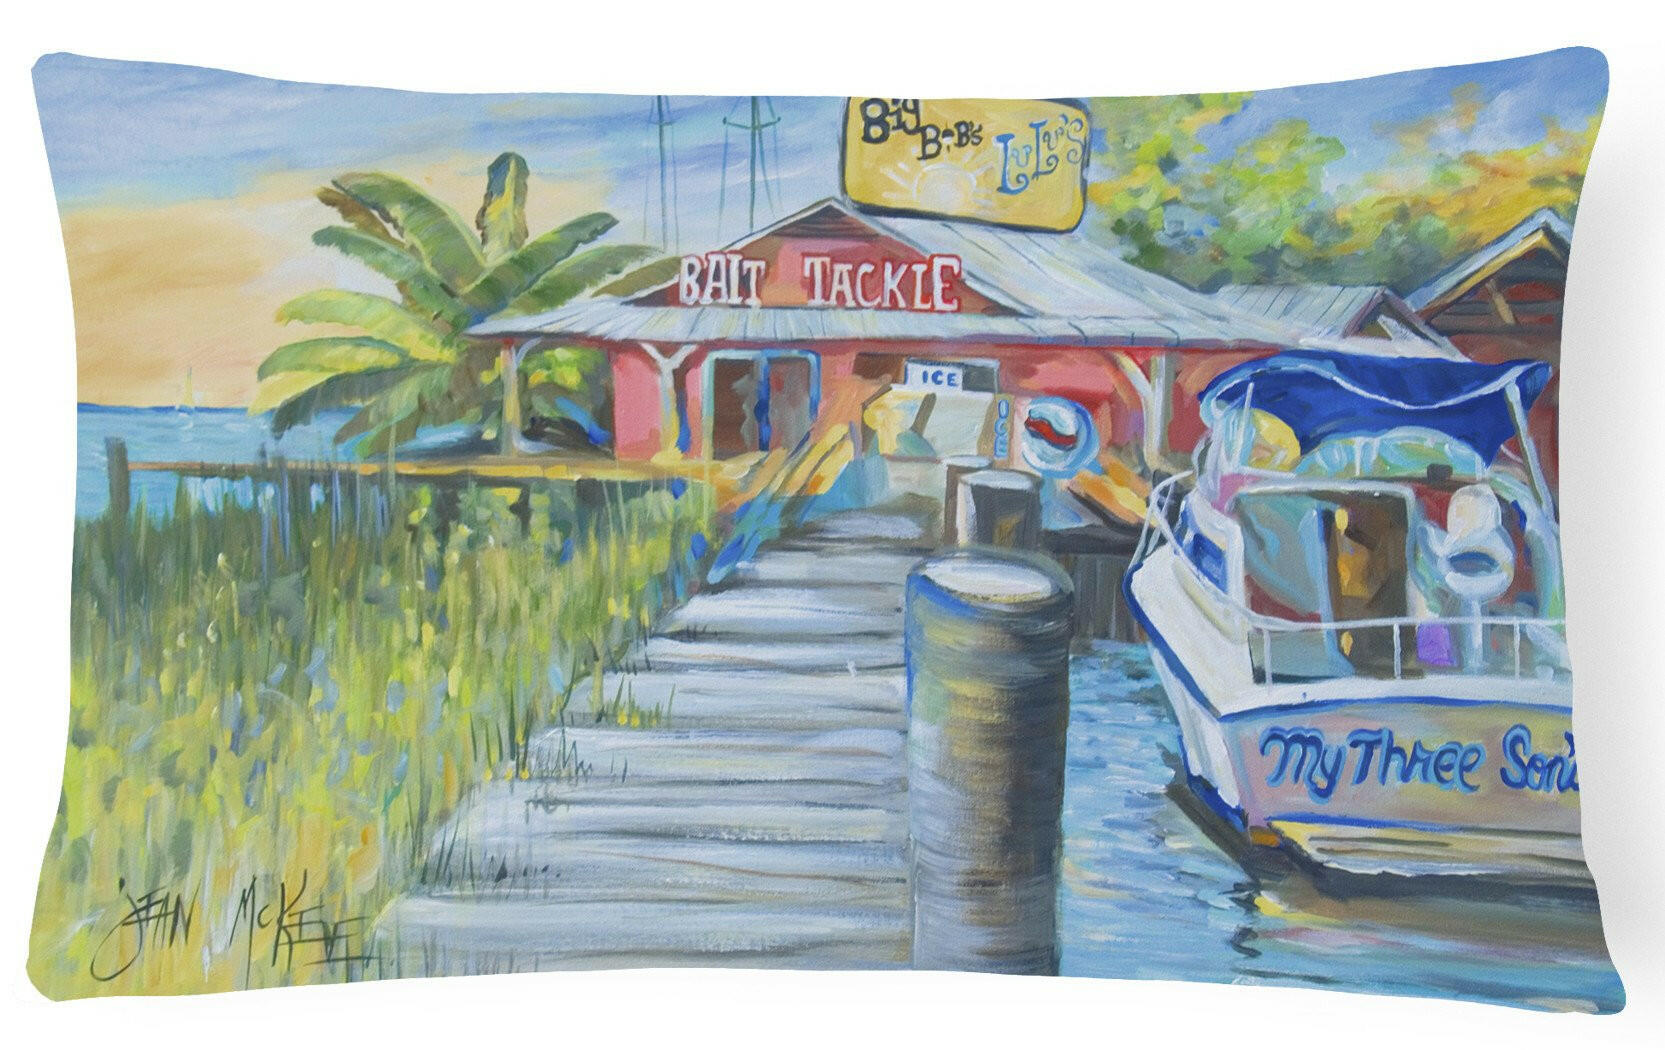 Deep Sea Fishing Boat at LuLu's Canvas Fabric Decorative Pillow JMK1050PW1216 by Caroline's Treasures